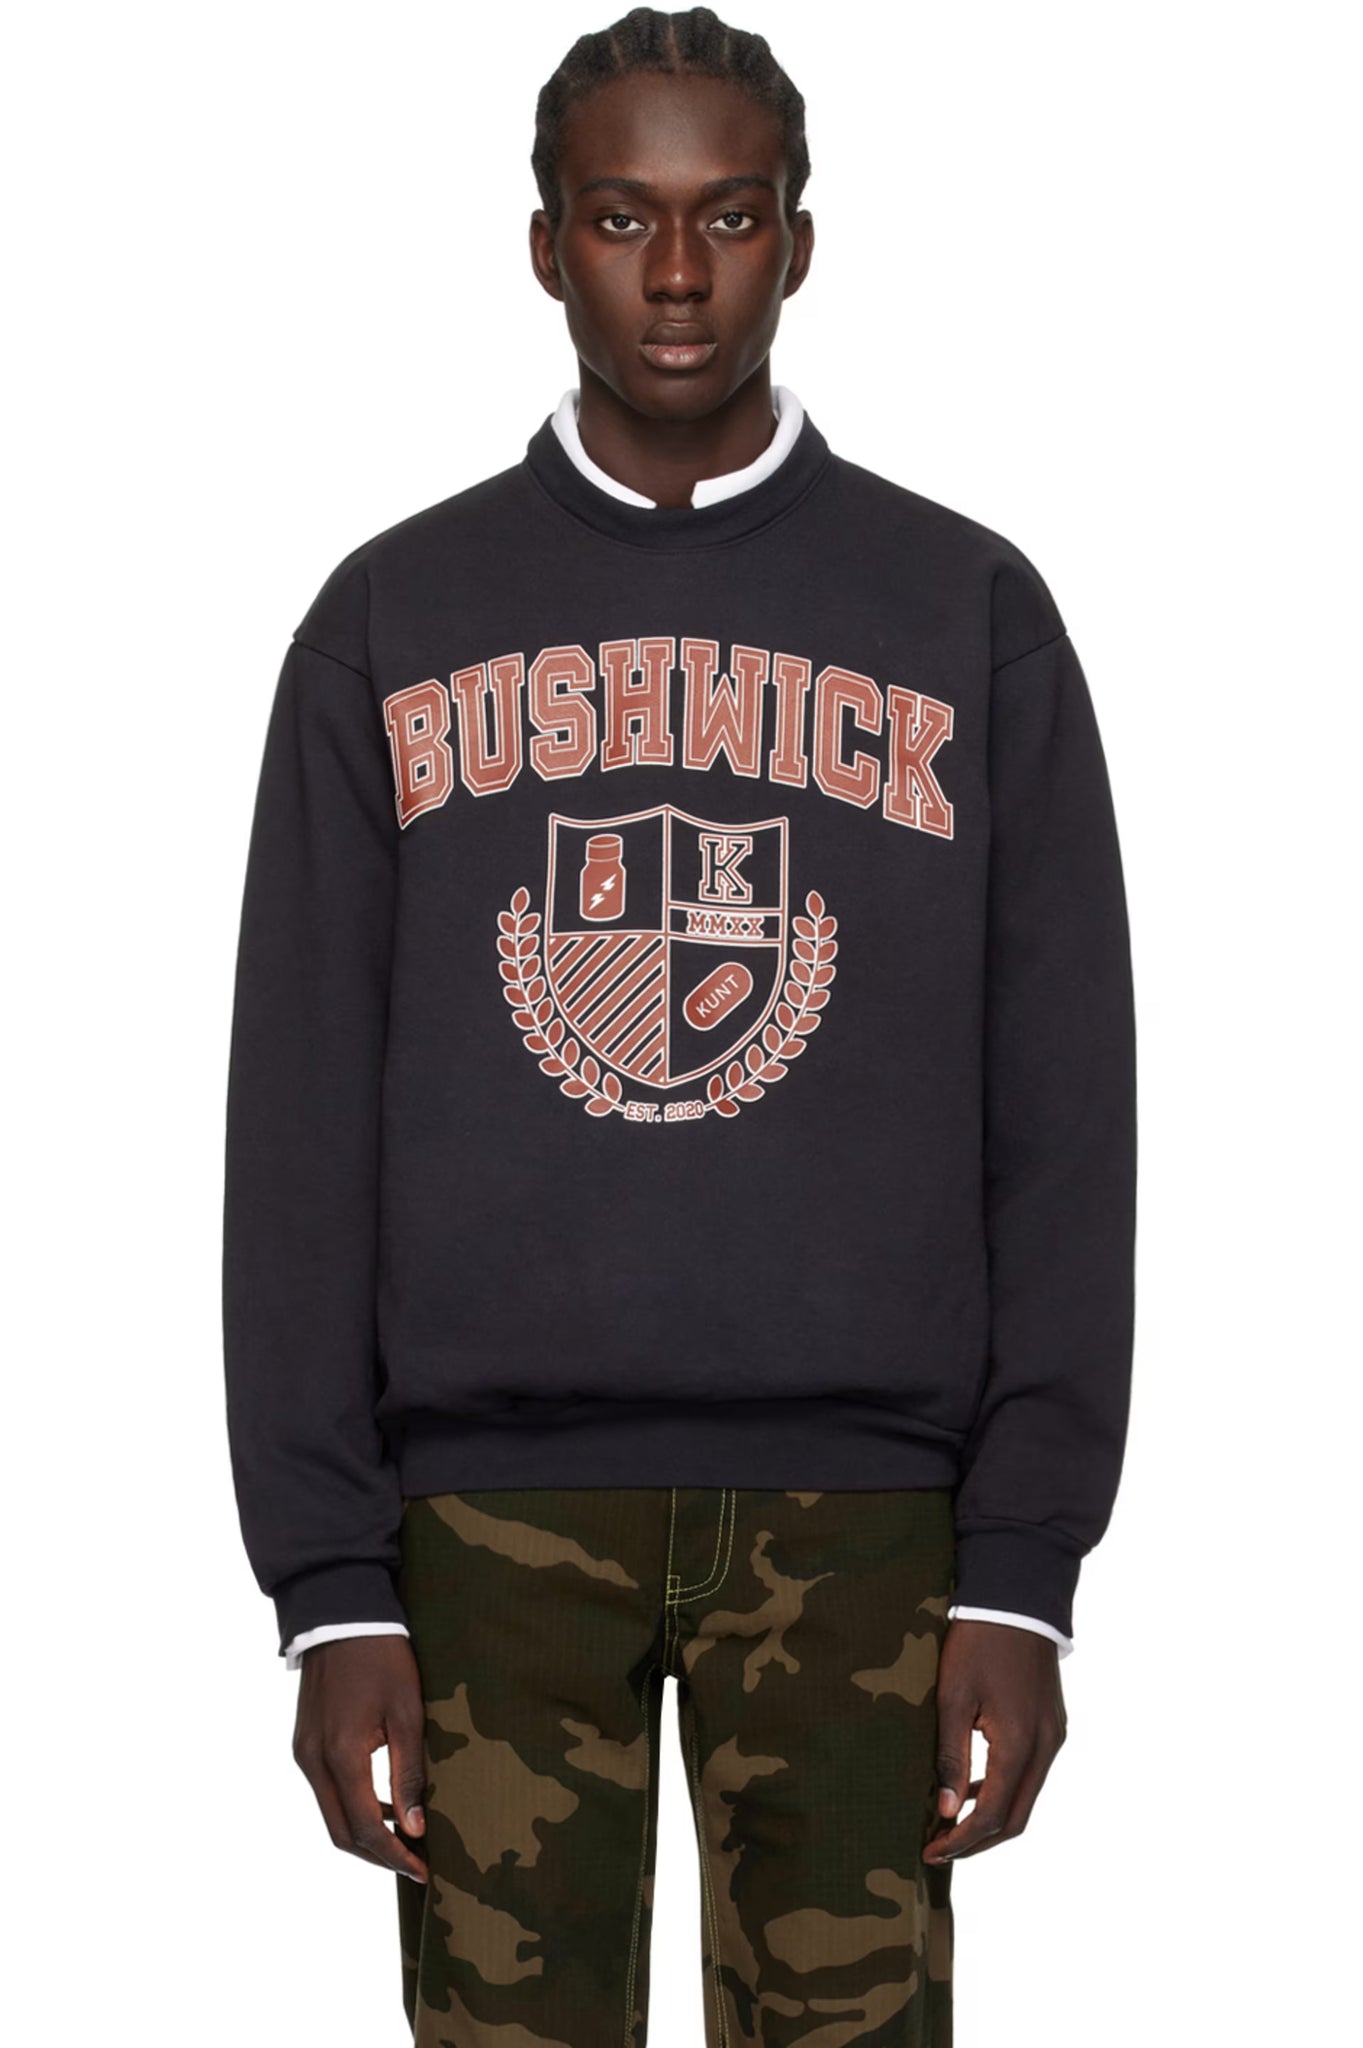 Black "BUSHWICK" Sweatshirt